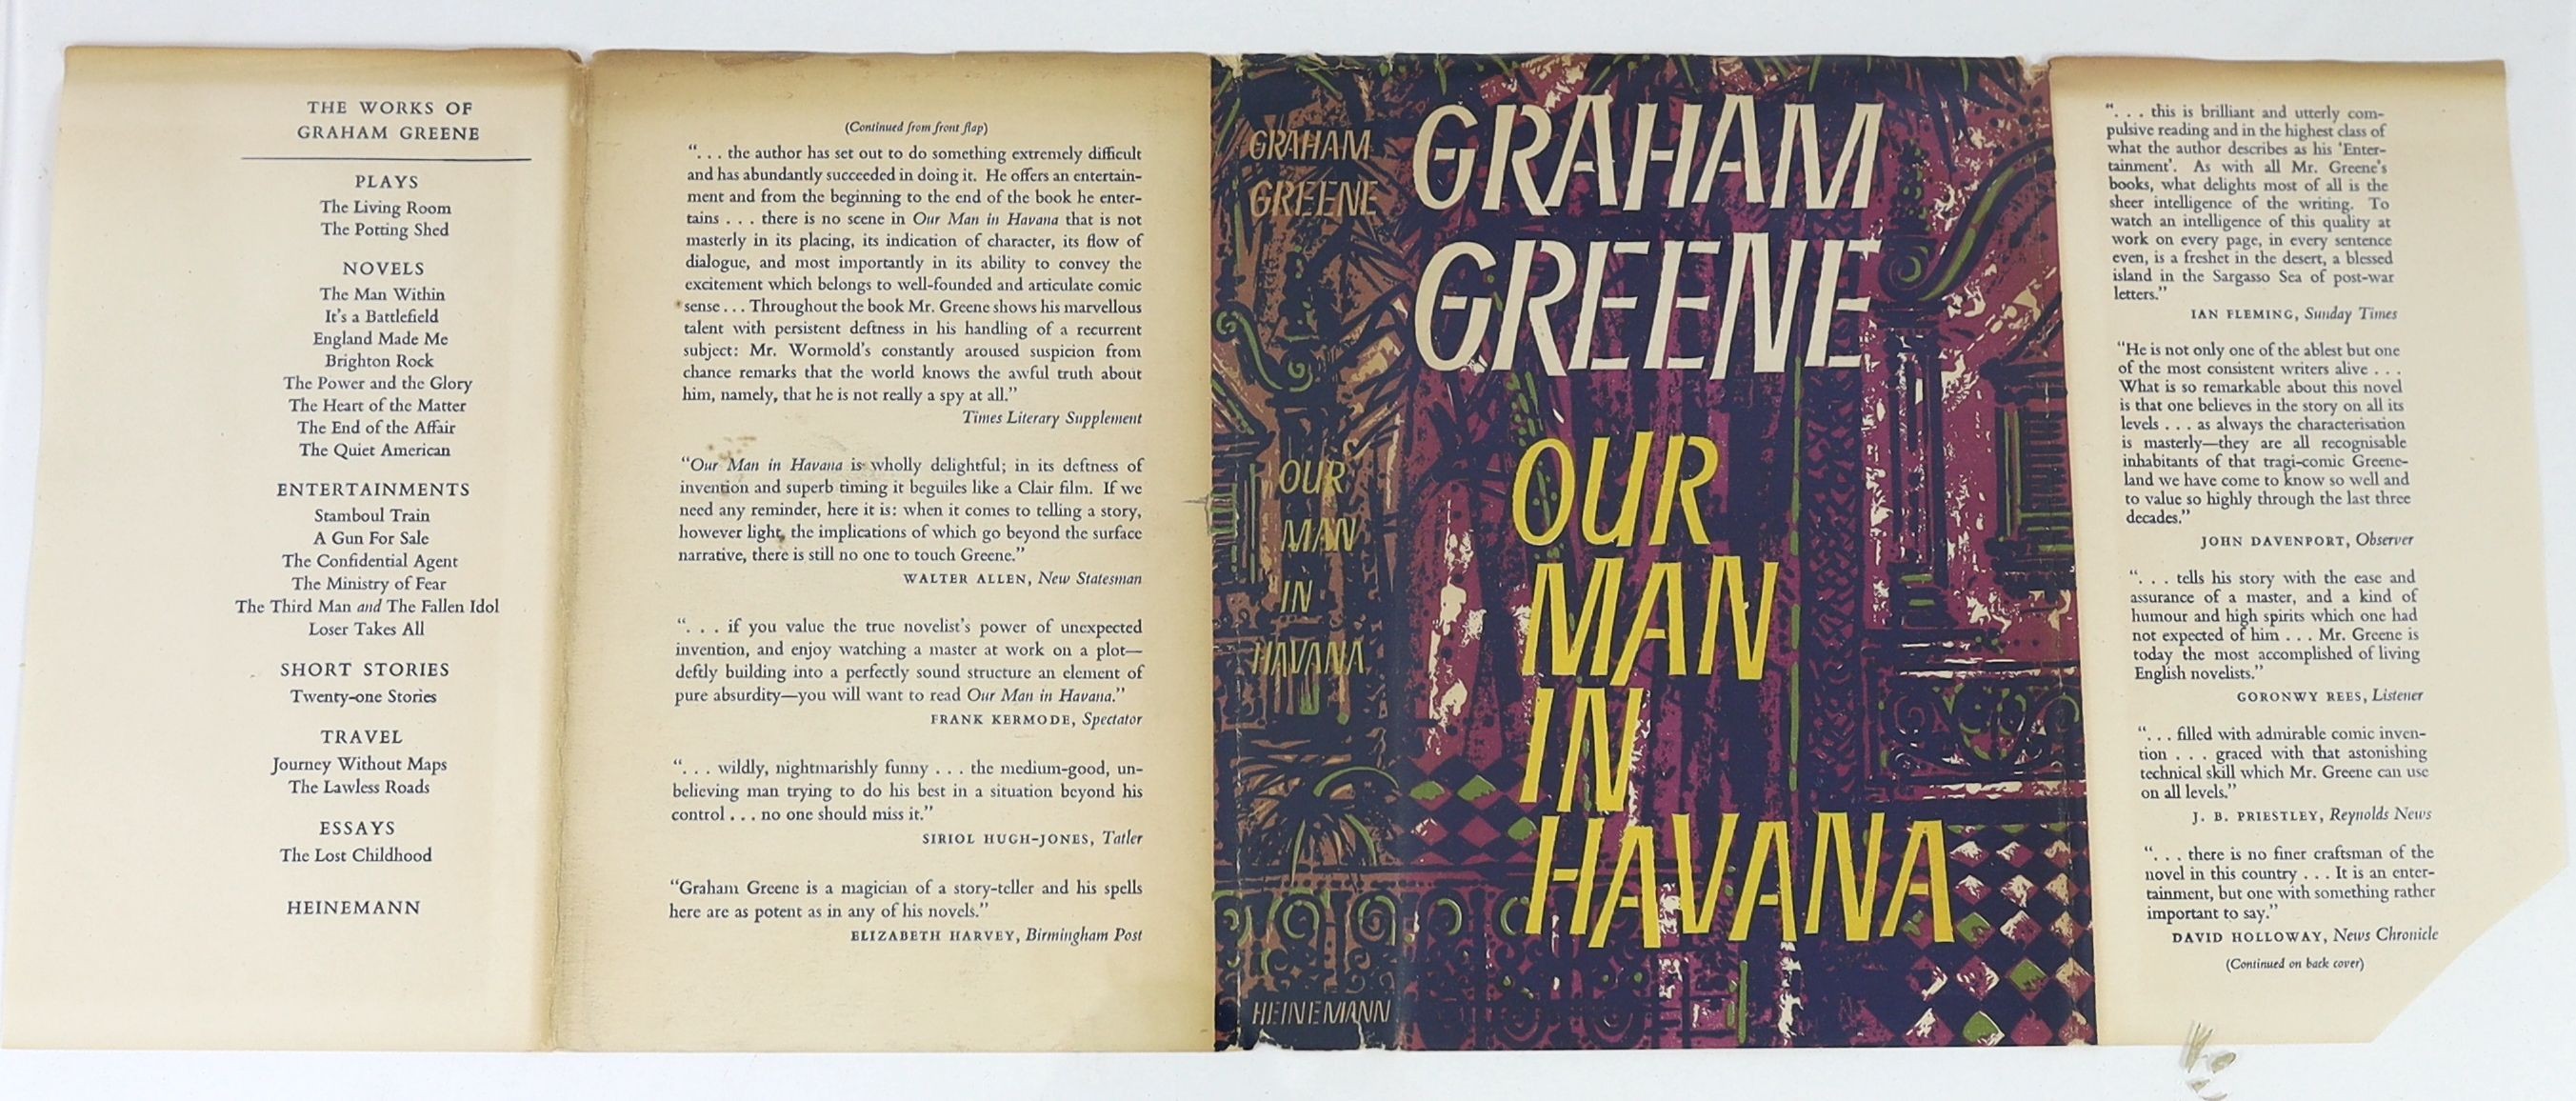 Greene, Graham - Our Man in Havana, 1st edition, in clipped d/j, William Heinemann, London, 1958